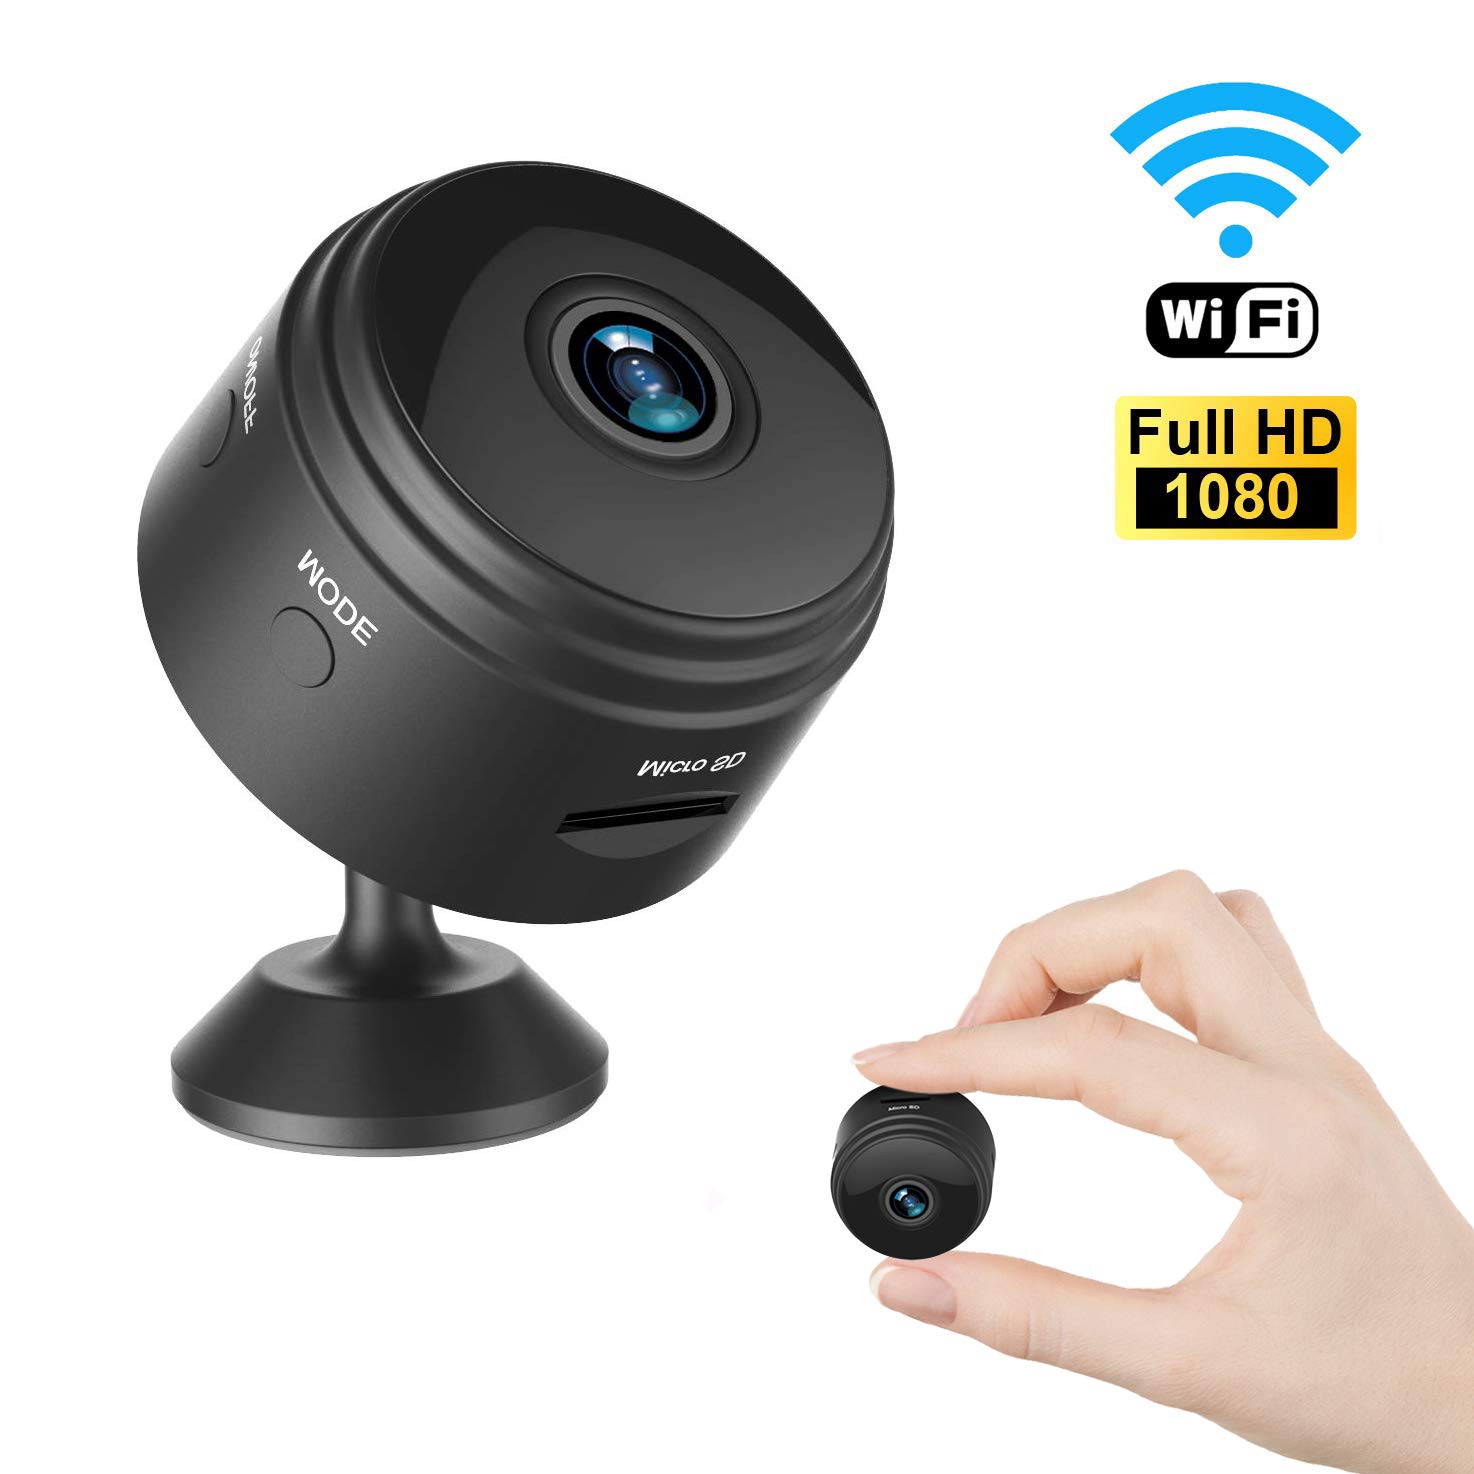 UTOPB Wireless Mini Spy Camera